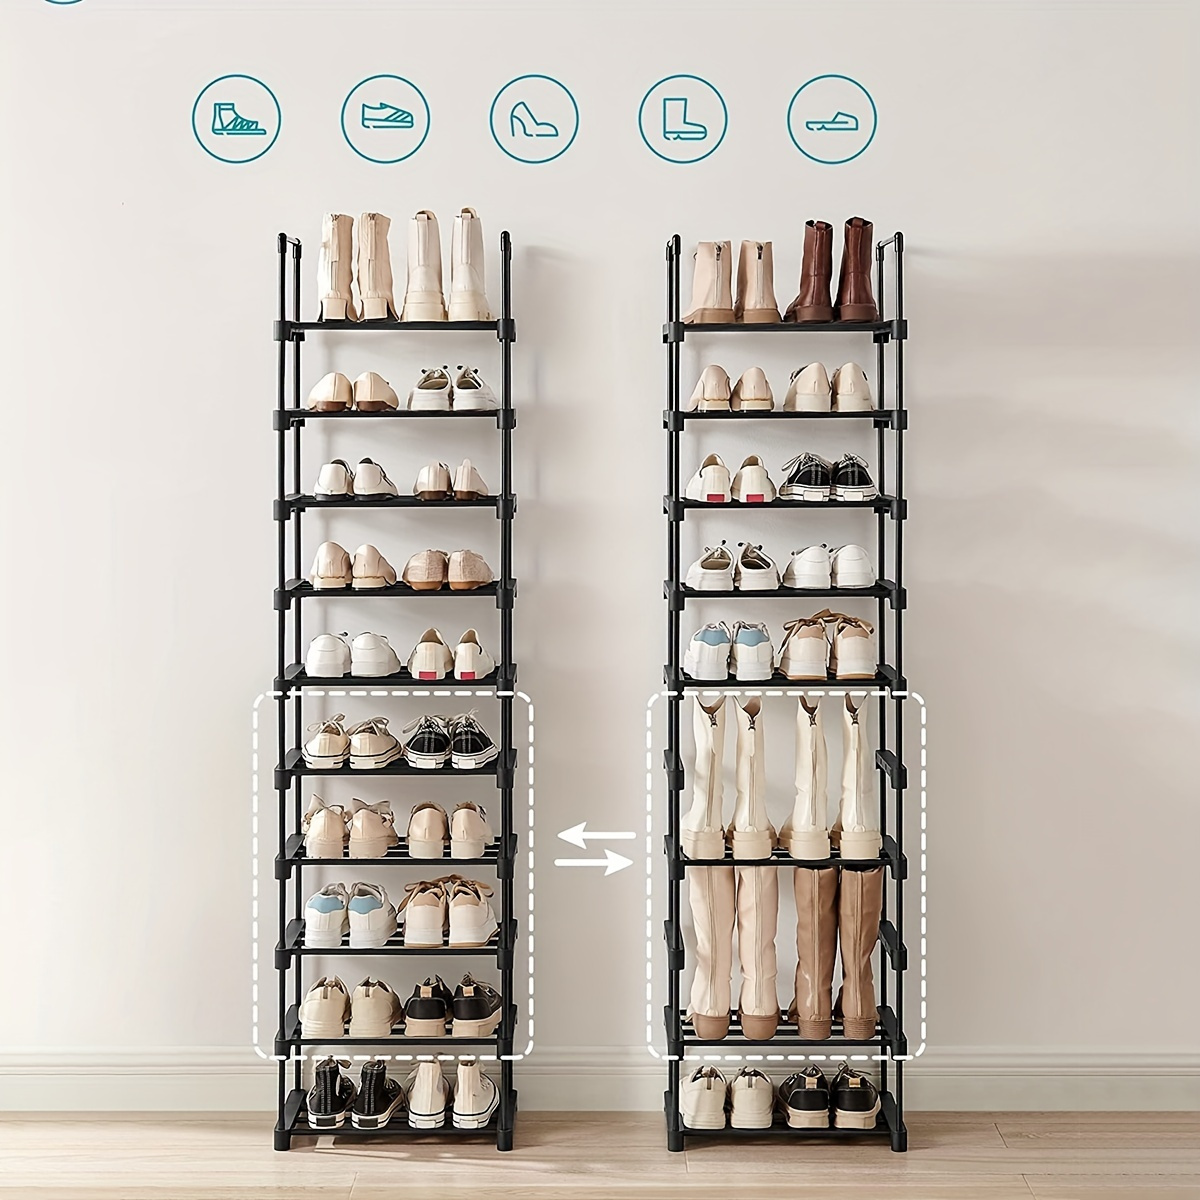 Hassch Tall Shoe Rack 10 Tier Large Capacity Shoe Shelf Storage